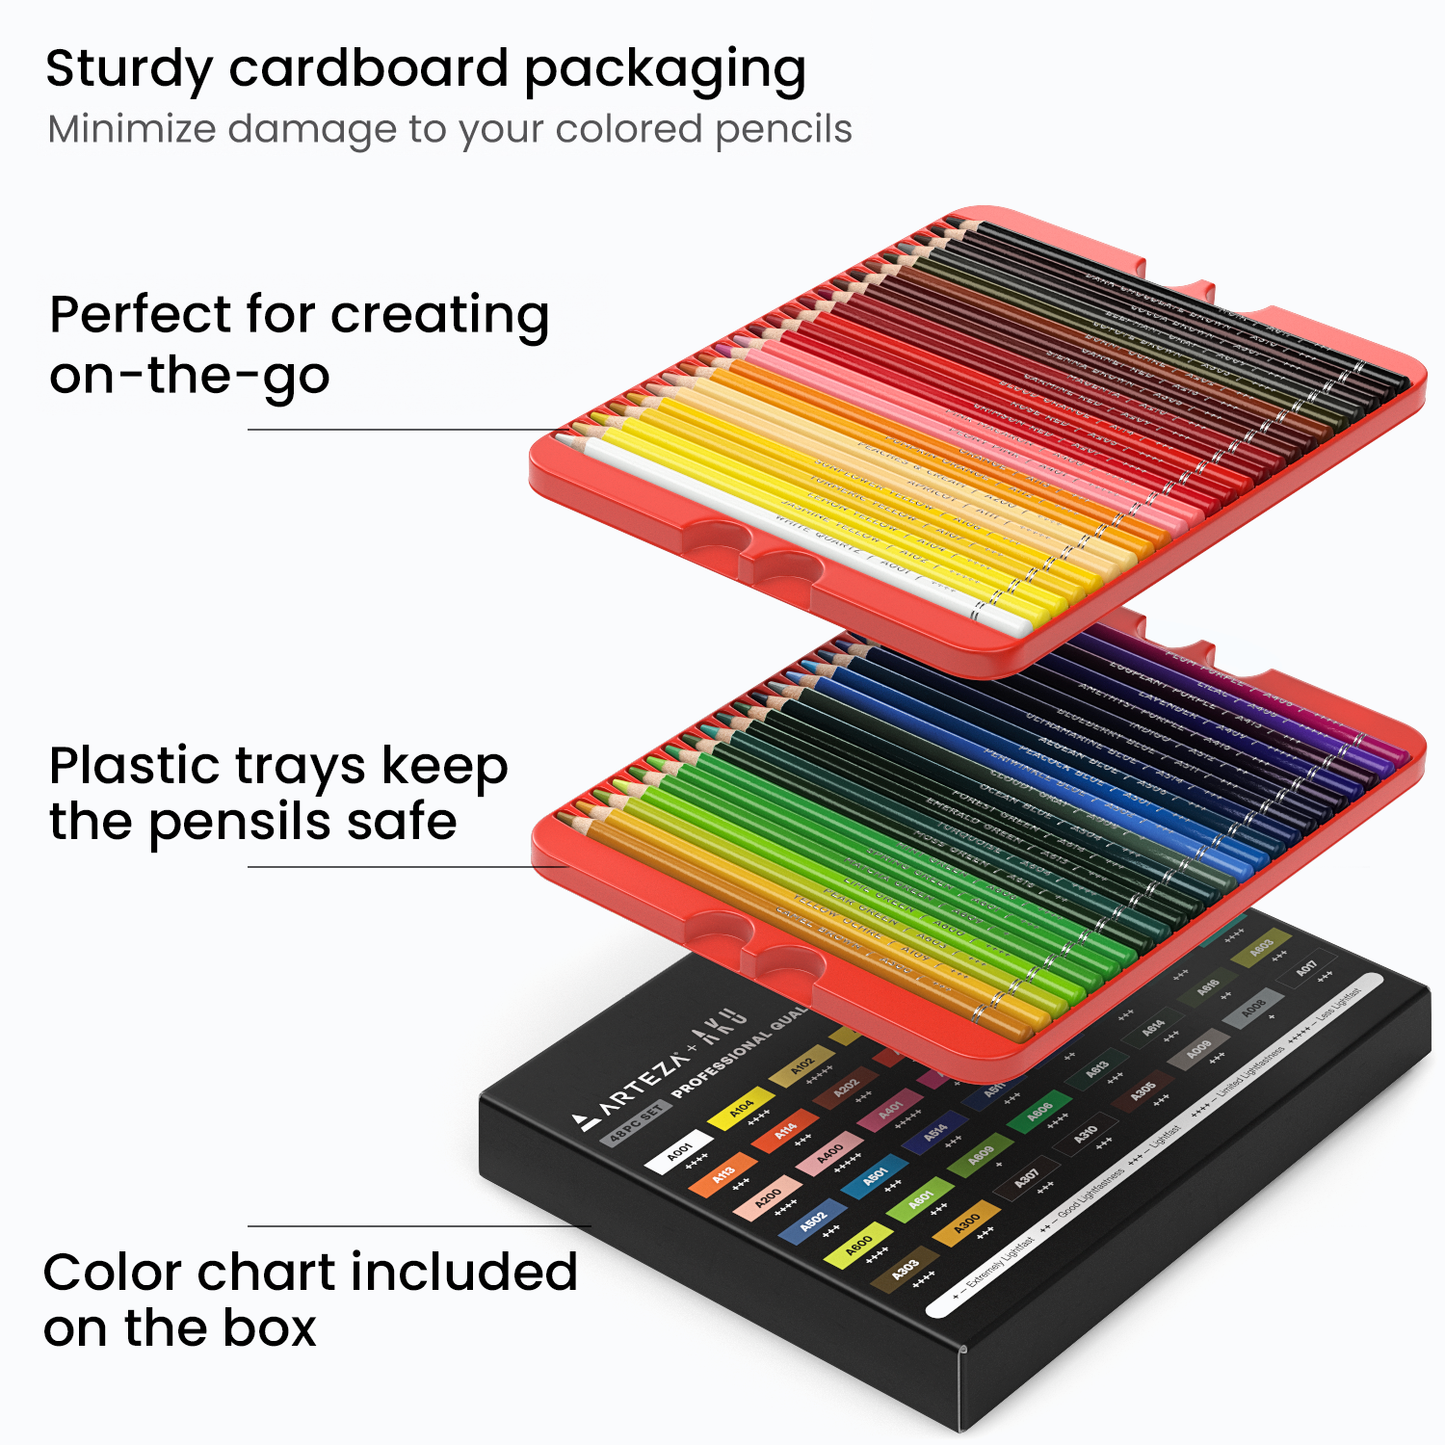 Arteza Expert Colored Pencils Review by MysticSparkleWings on DeviantArt